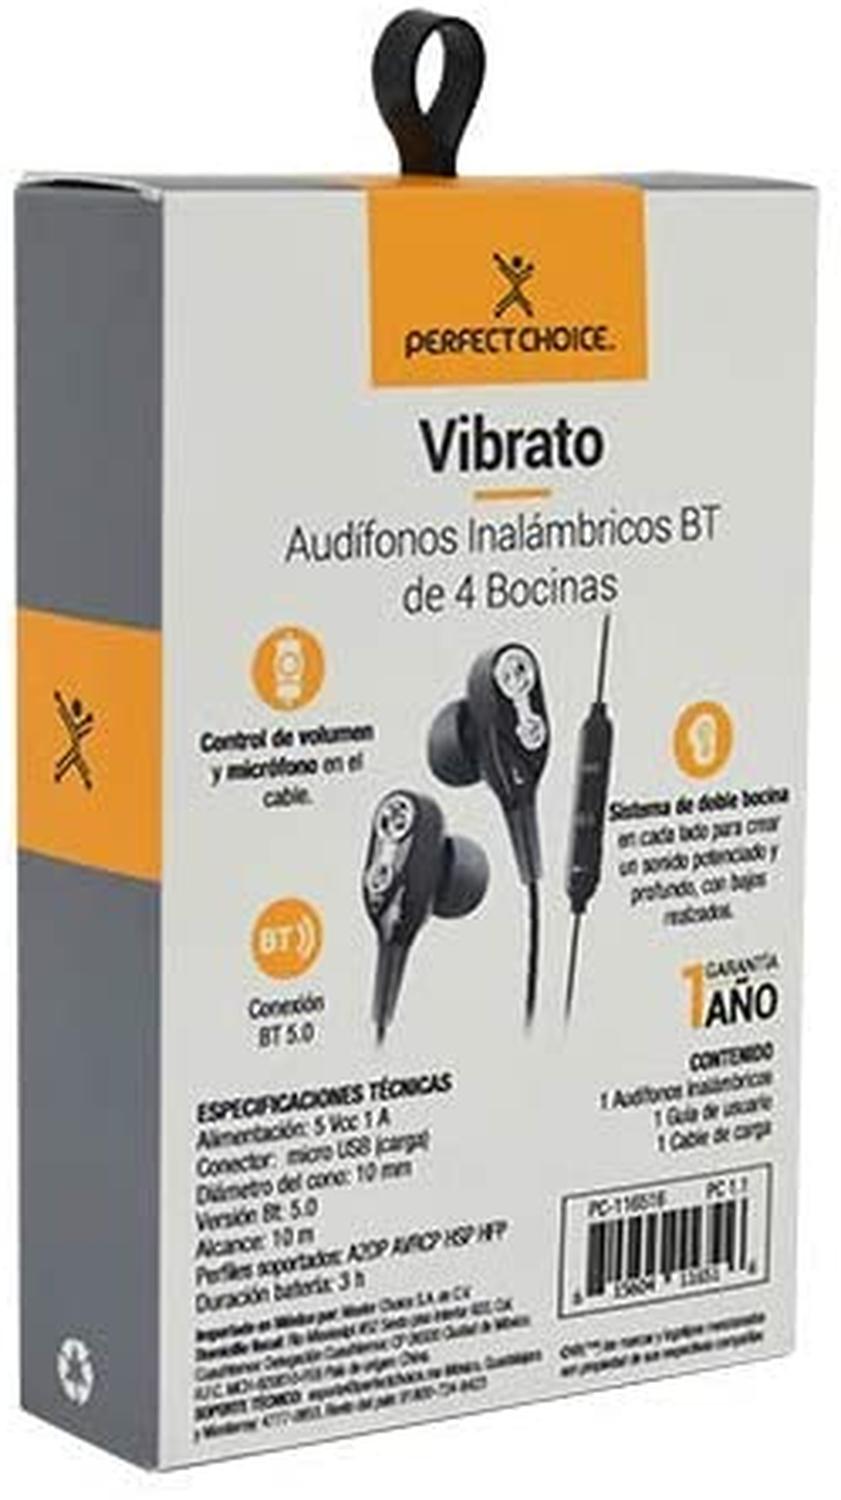 Audífonos Inalámbricos Bt de 4 Bocinas/PC-116516